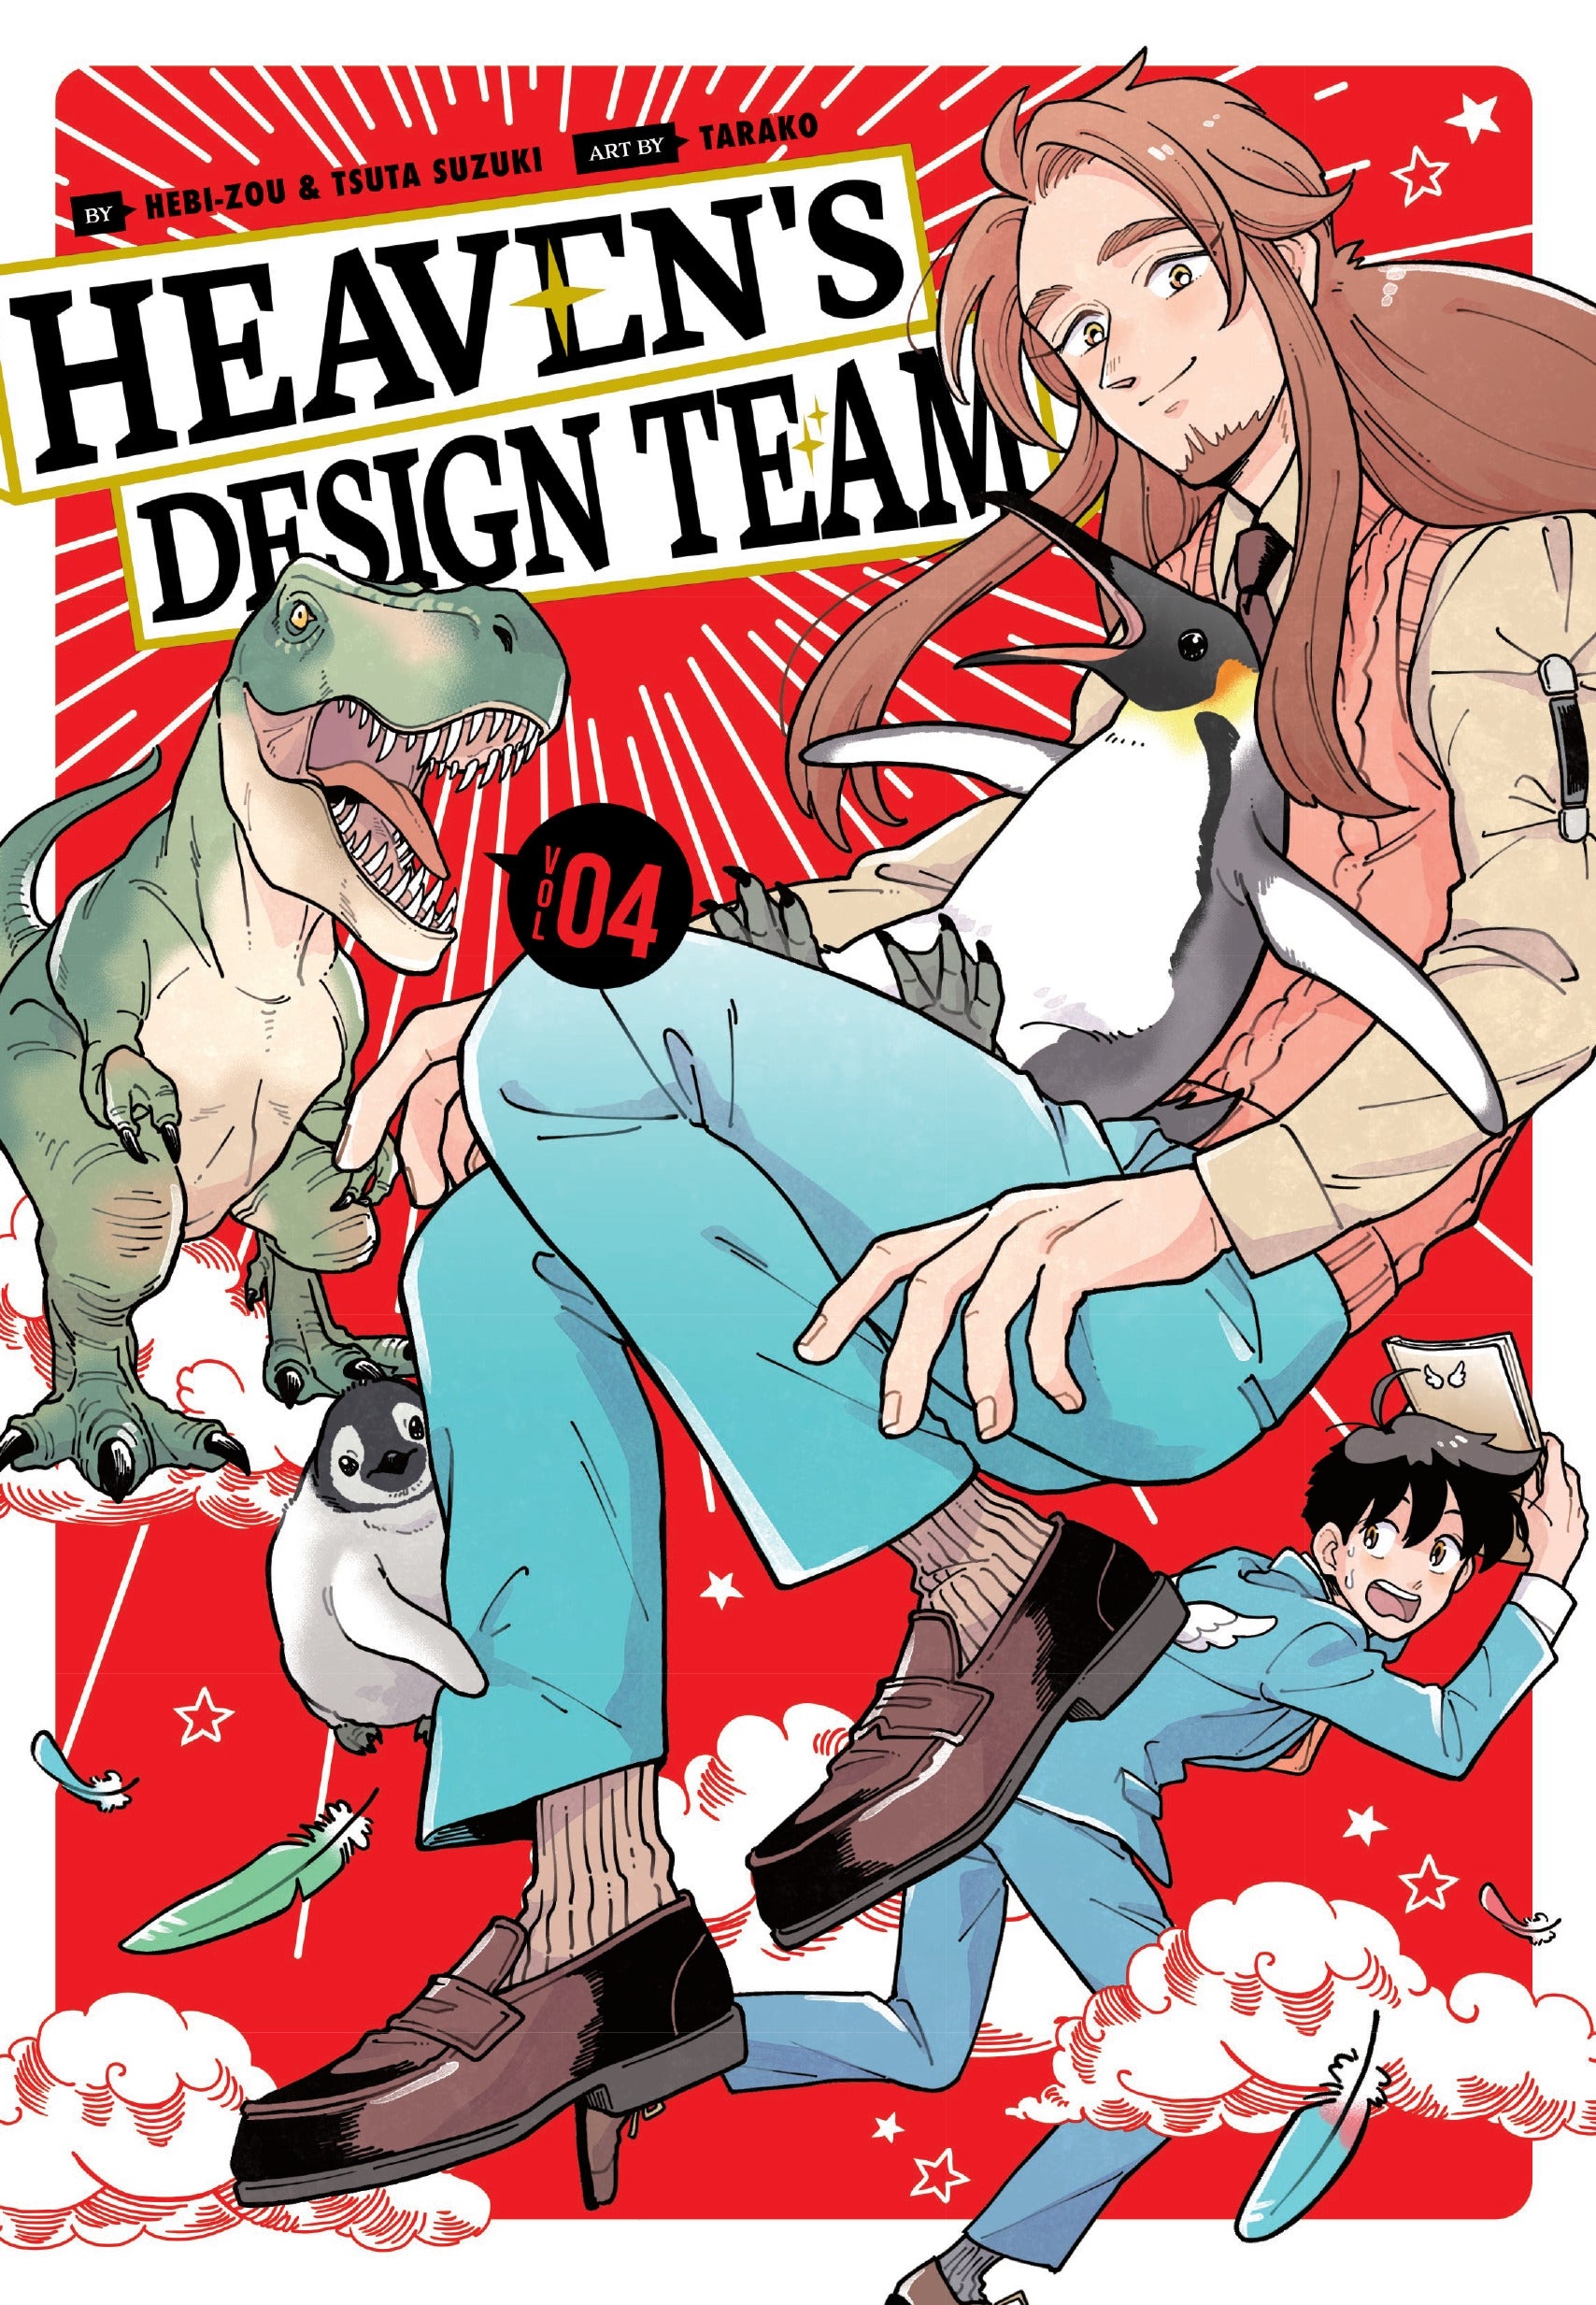 Heaven's Design Team, Vol. 4